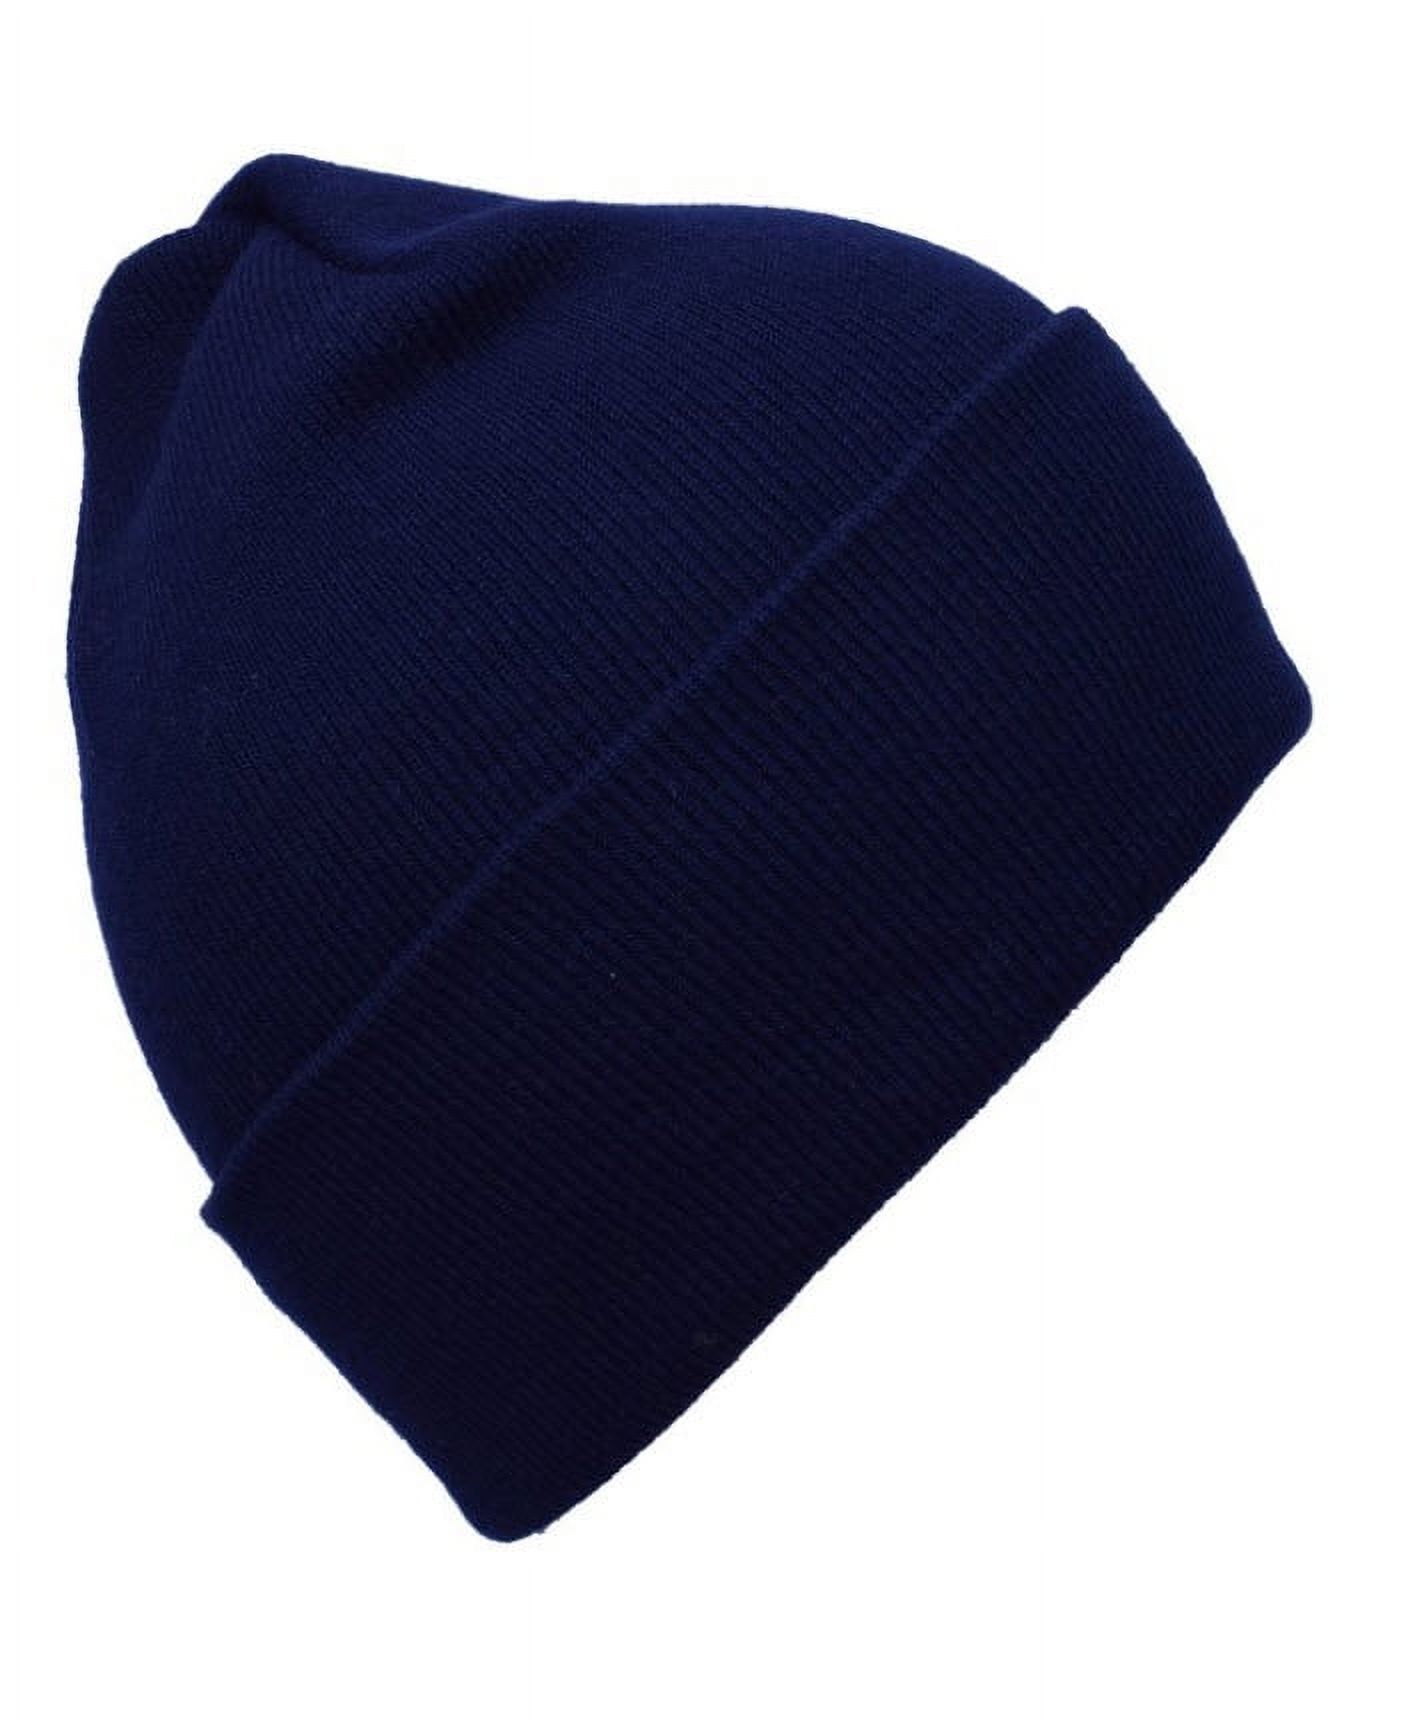 SET OF 4 BEANIE Warm Winter Beanies Hats Cap Toboggans Thermal Knit Cuff Acrylic Ski hats 12" (Navy+Black+Gray+Camo) - image 4 of 5